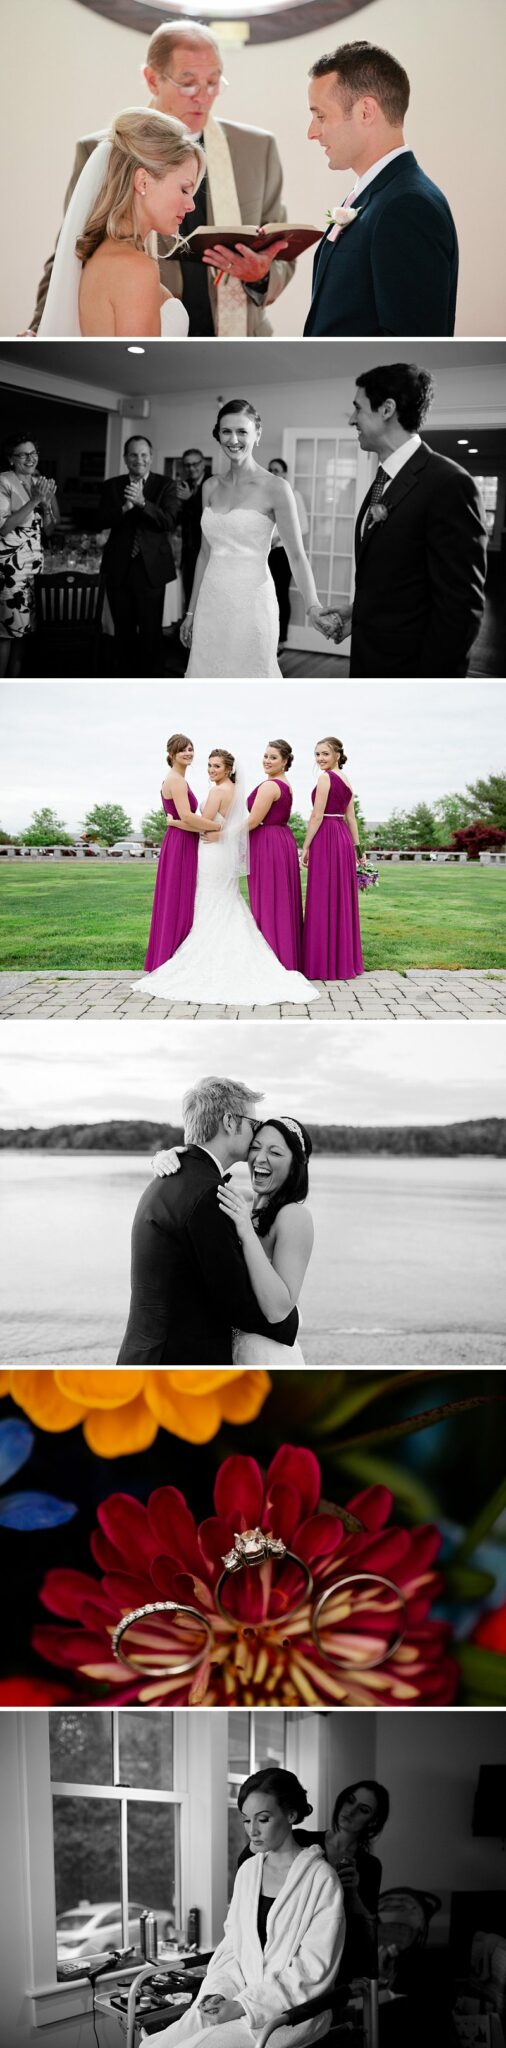 Maine-wedding-photographer-best-wedding-photos-of-2014-0027